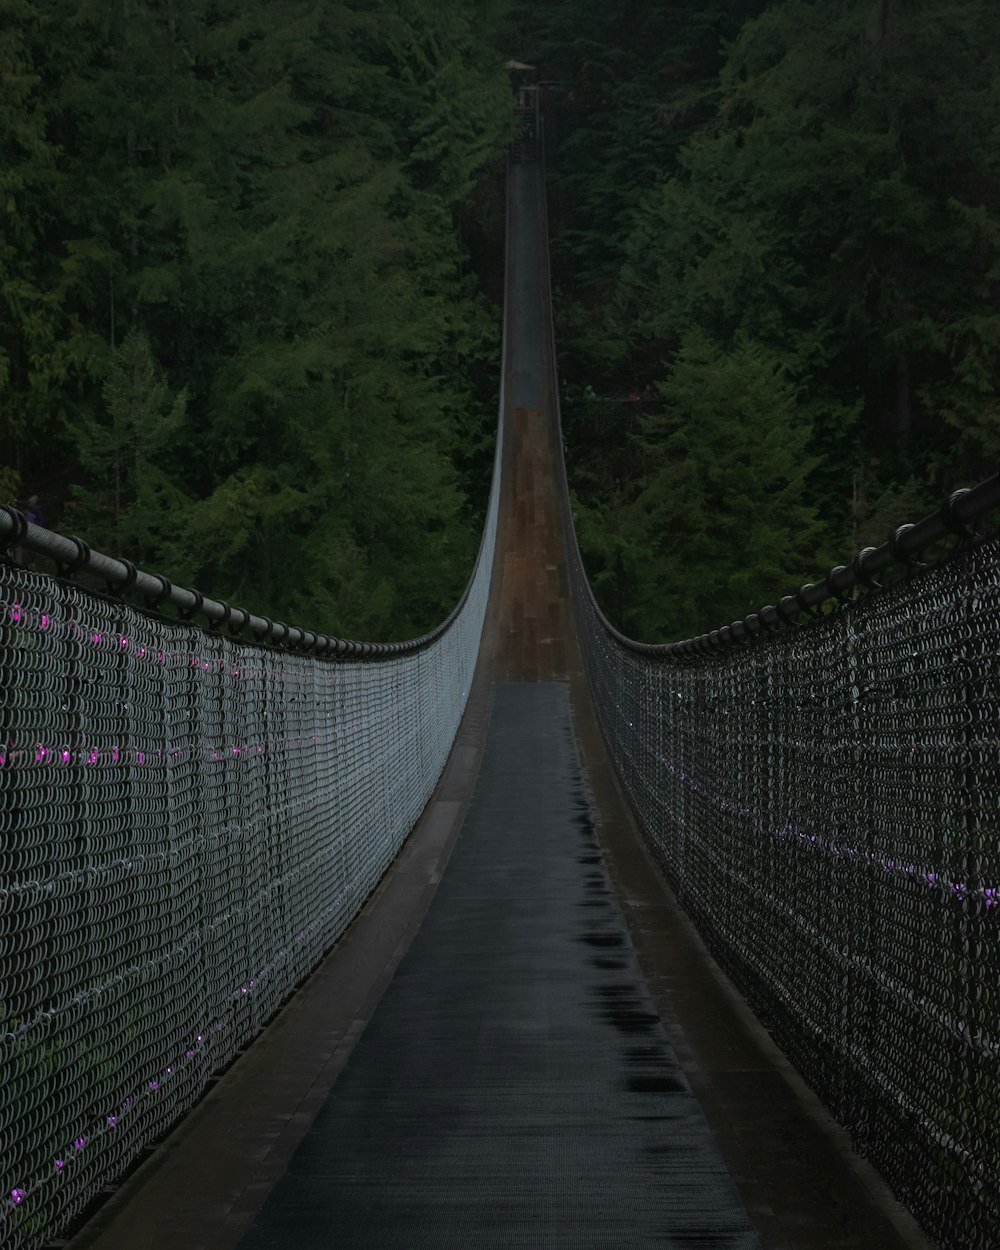 Capilano Suspension Bridge with a long metal railing